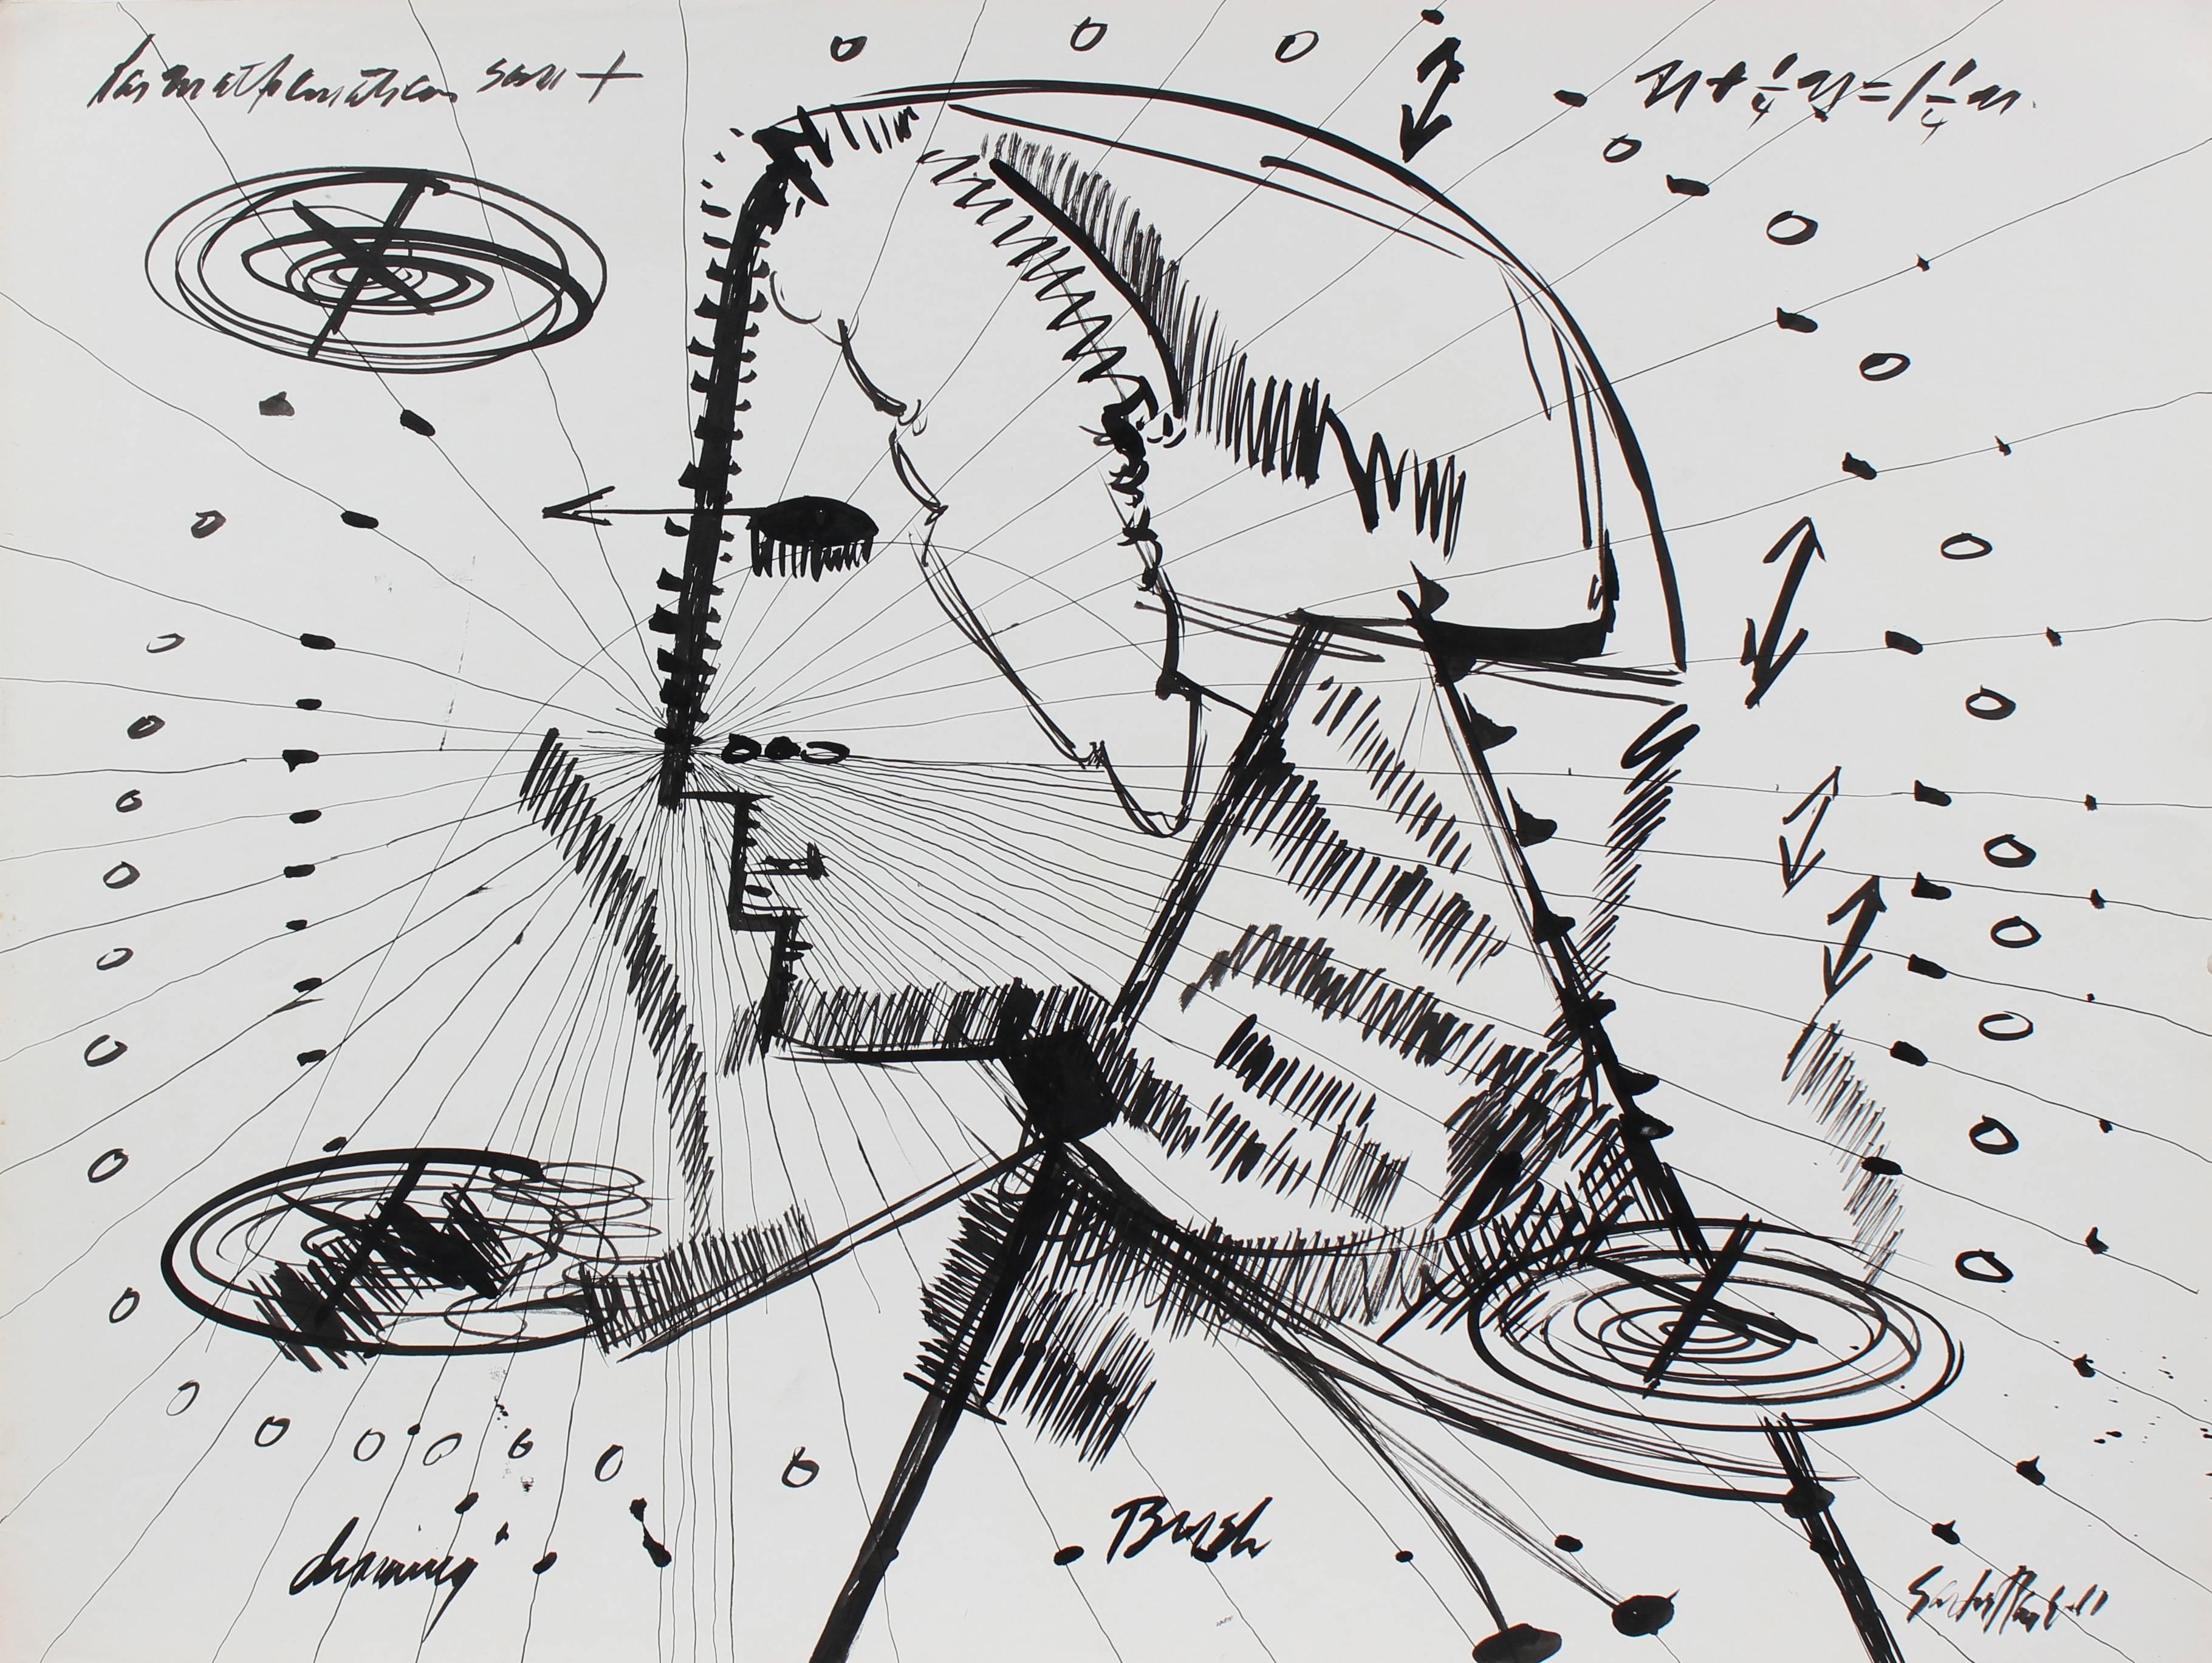 Santos Rene Irizarry Portrait - "The Mathematician", Modernist Ink Drawing, 1960s